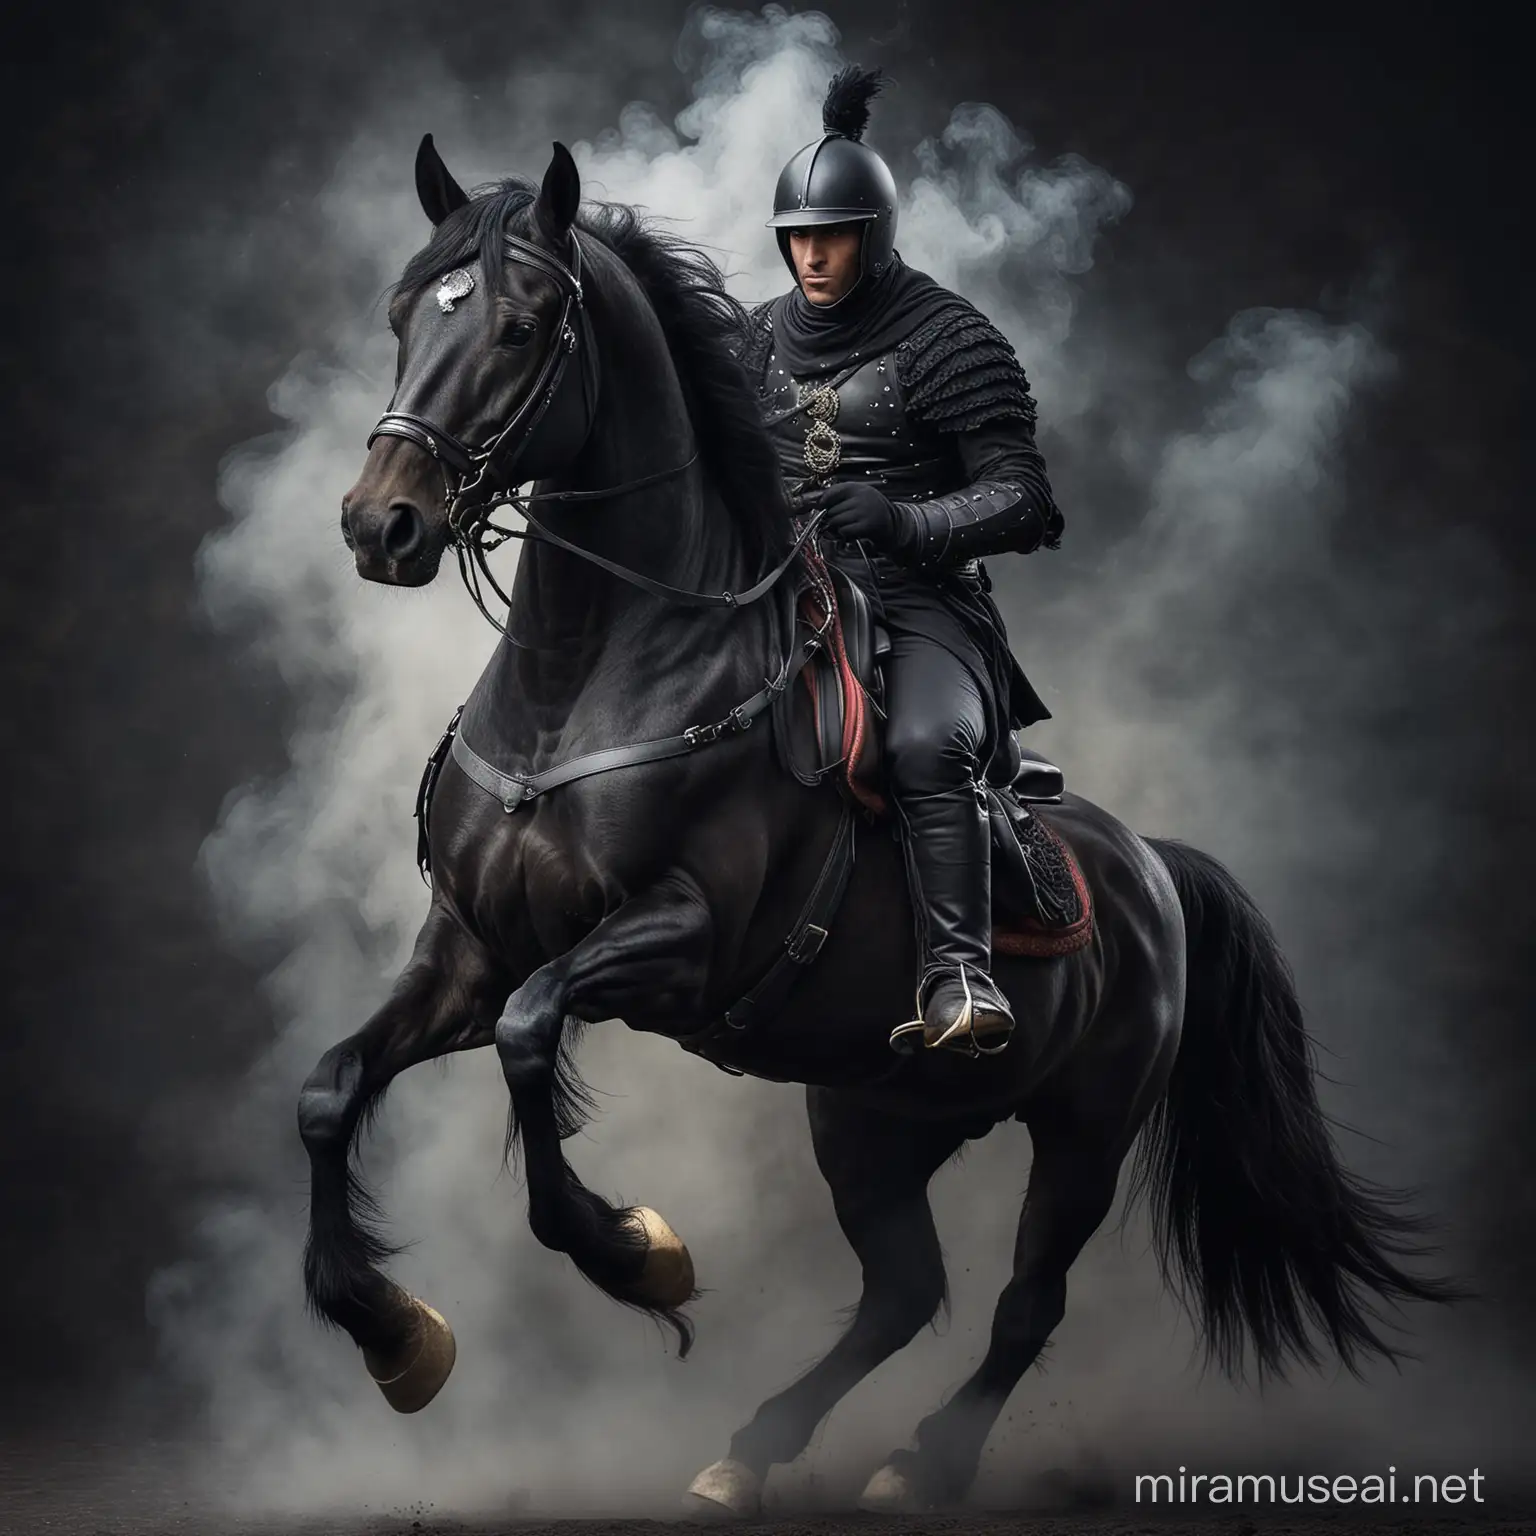 A black horse rider, knight, dark colorful background, smoke